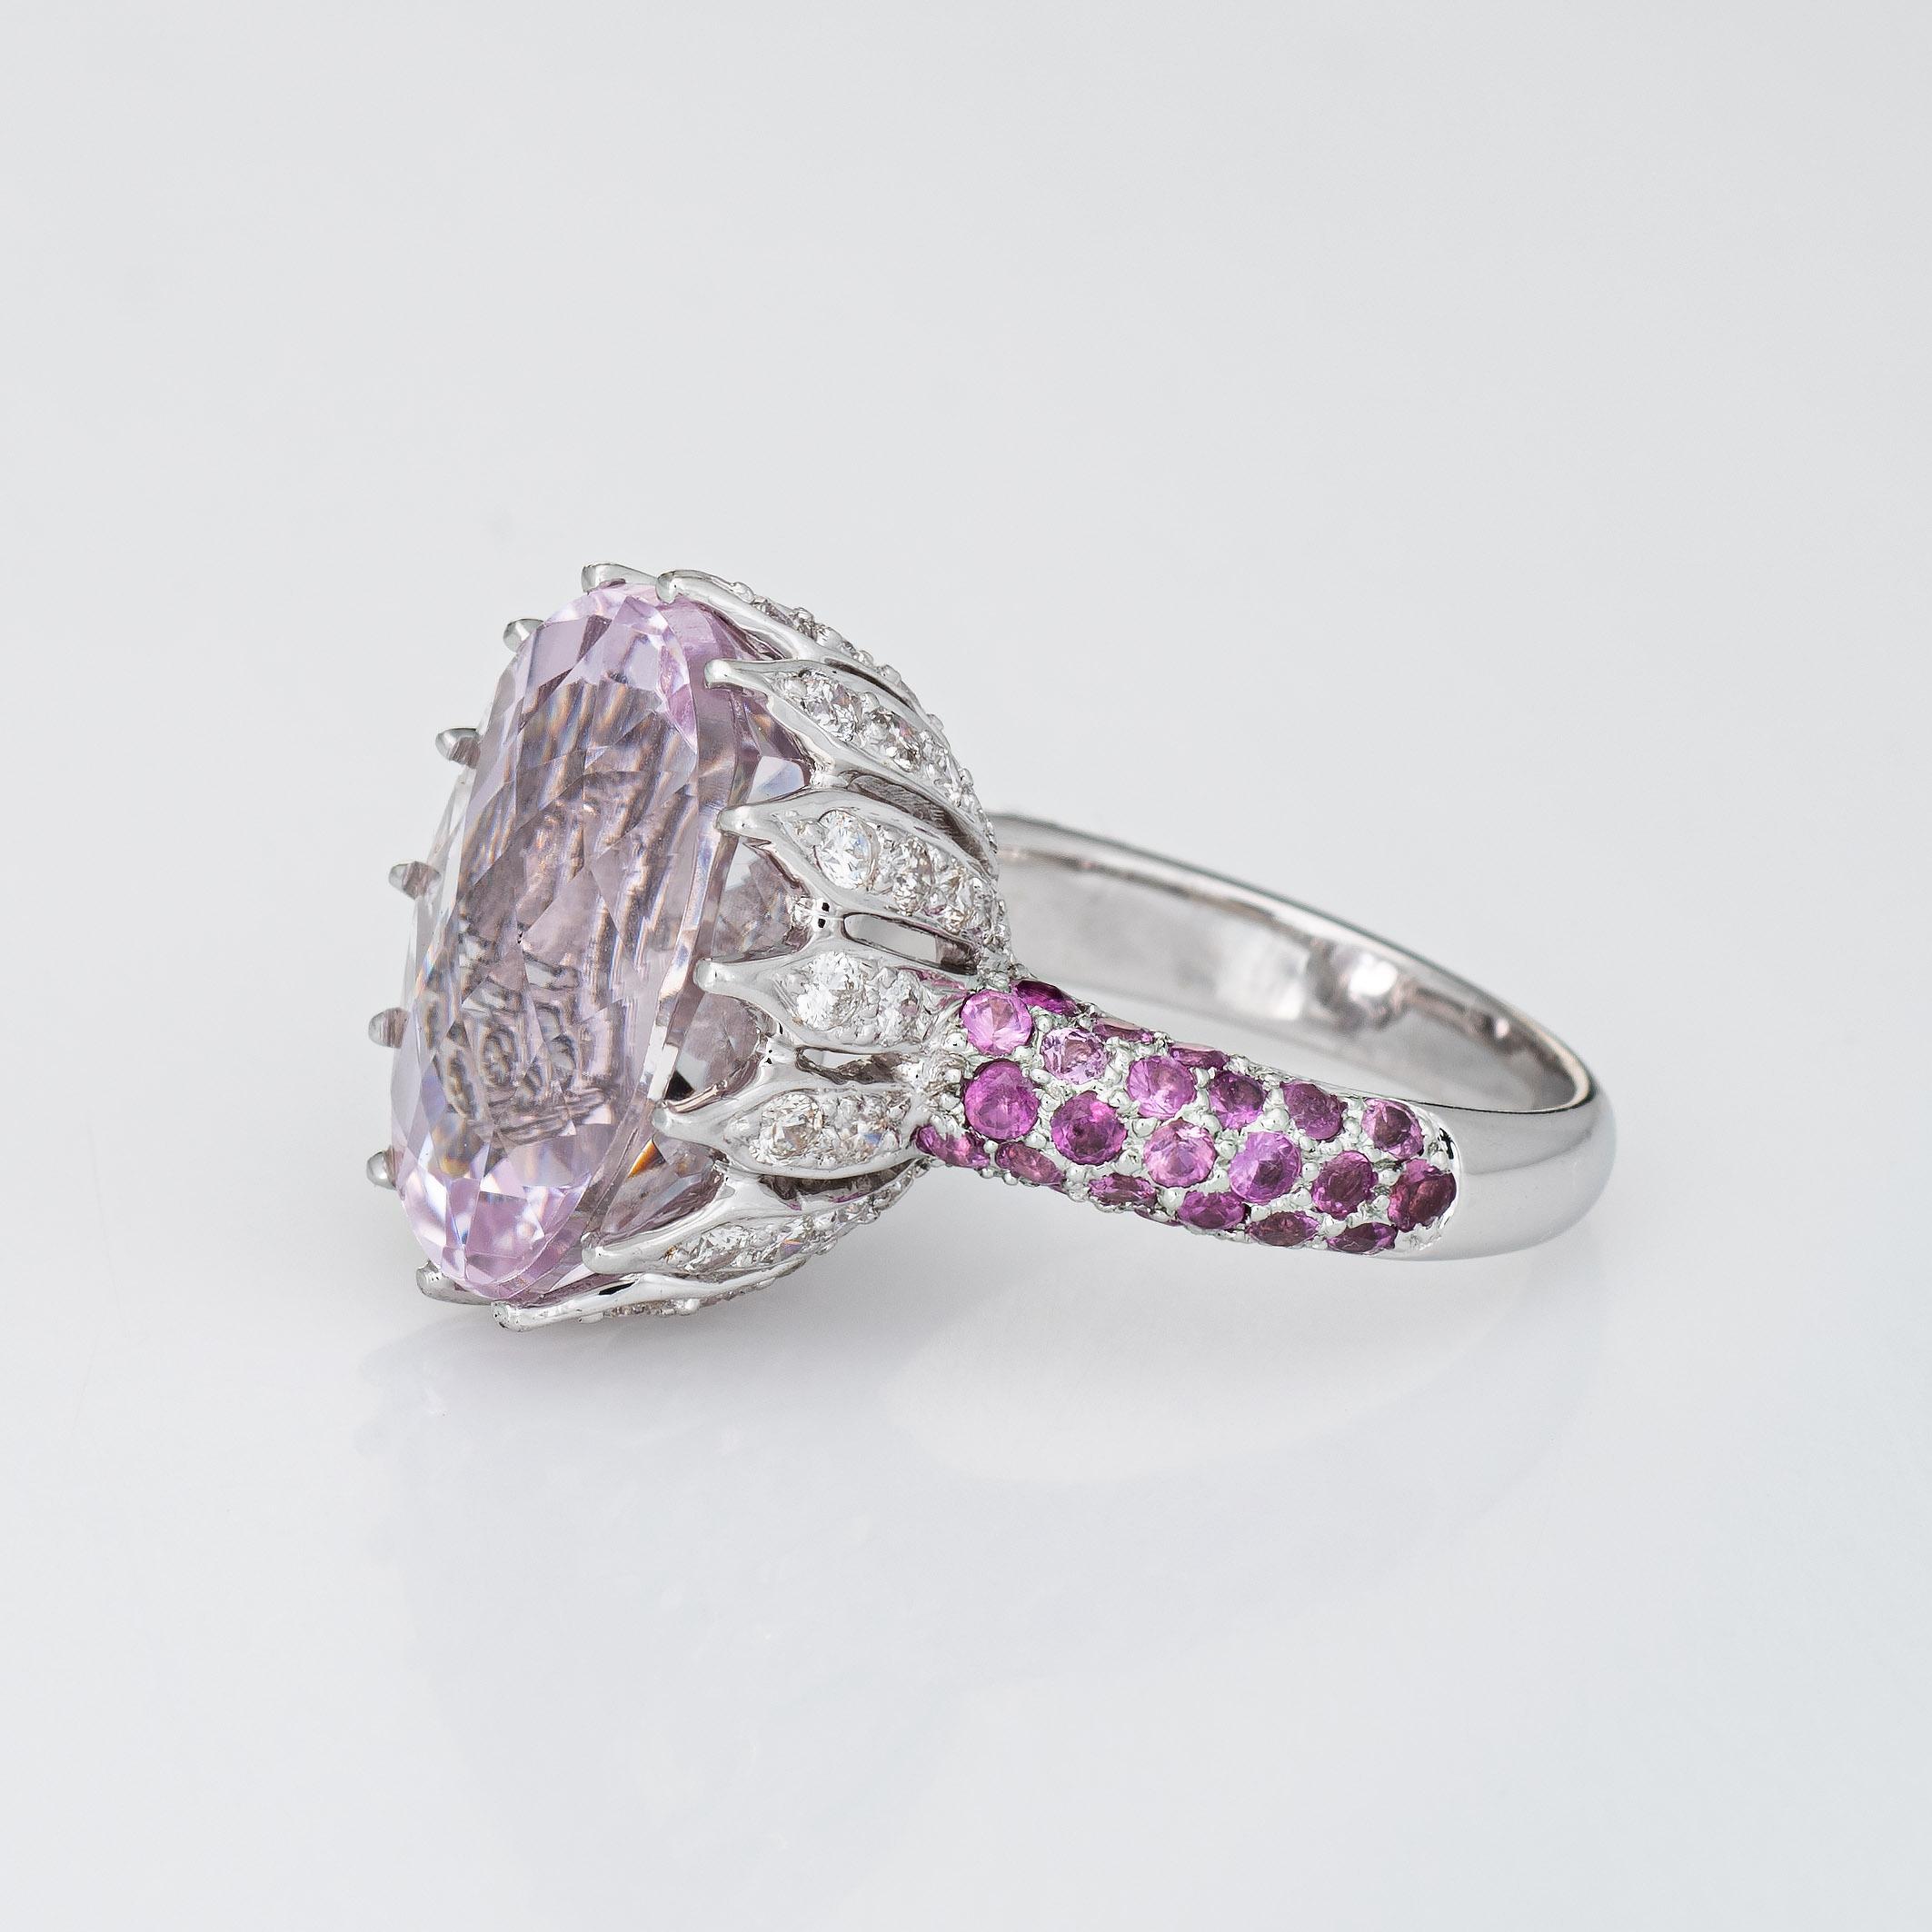 Oval Cut 10.50ct Kunzite Pink Sapphire Ring Estate 18k White Gold Diamond Jewelry